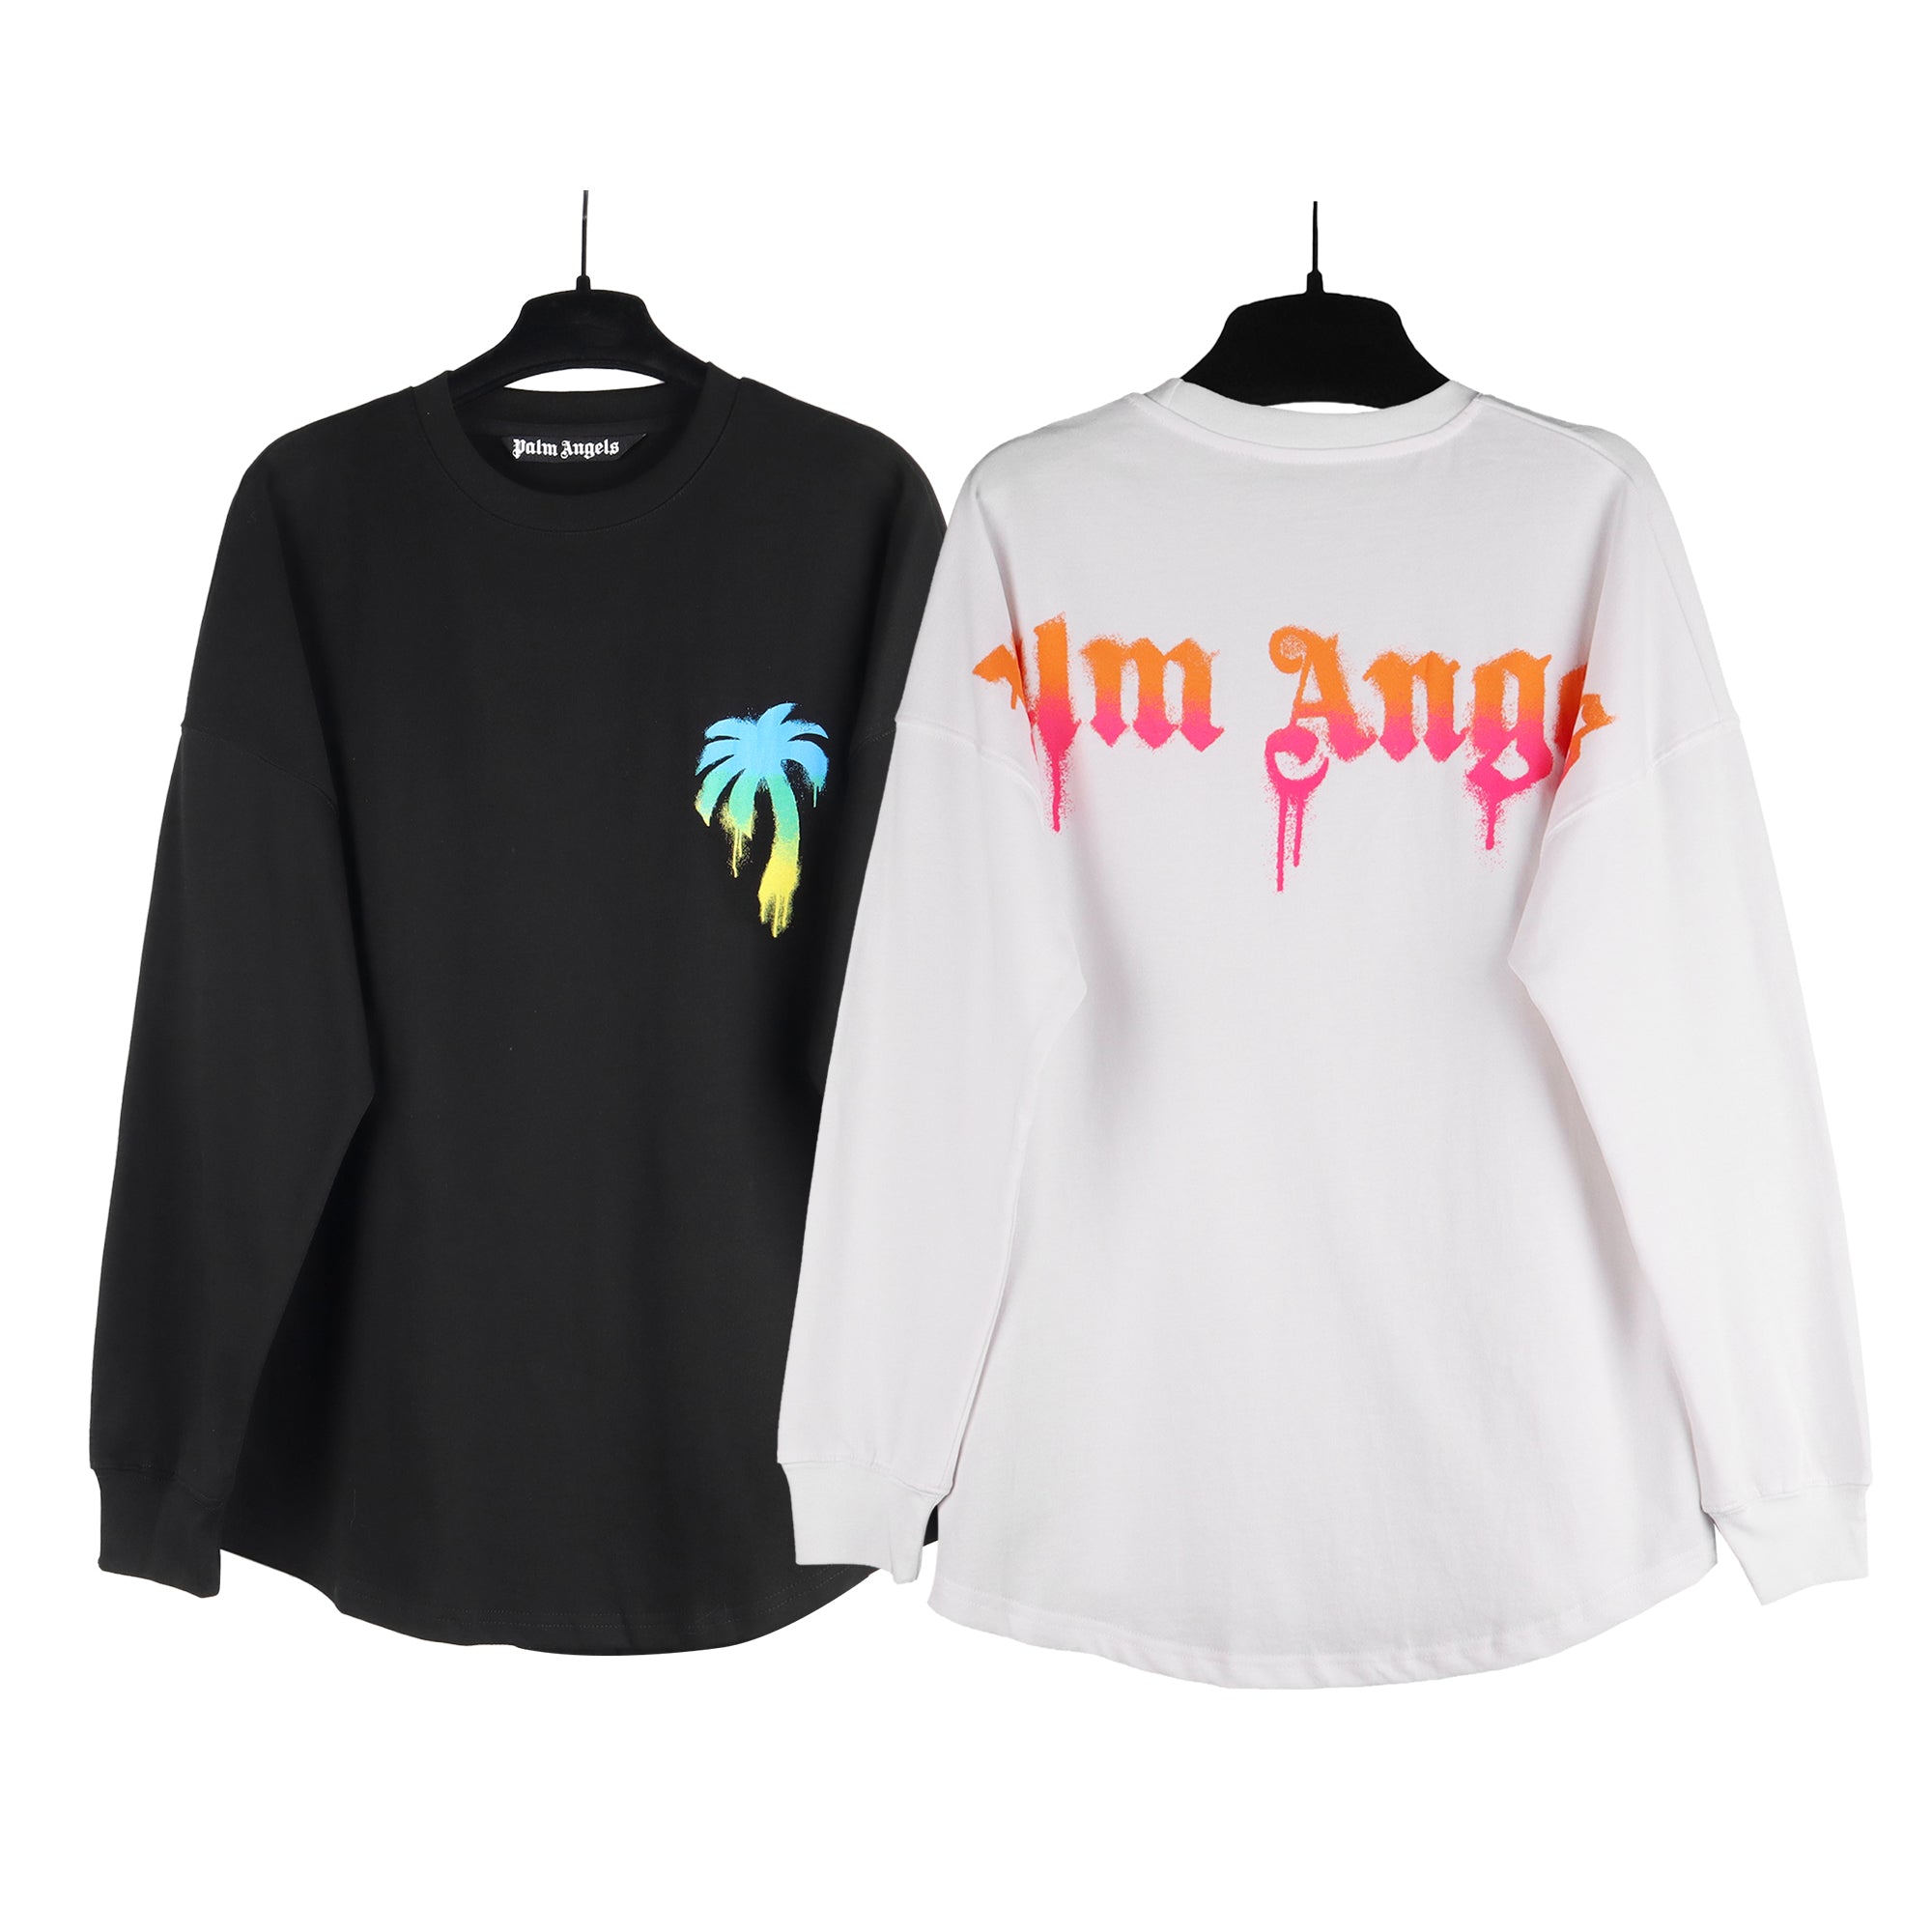 Palm Angels Palm Angels Sweatshirt